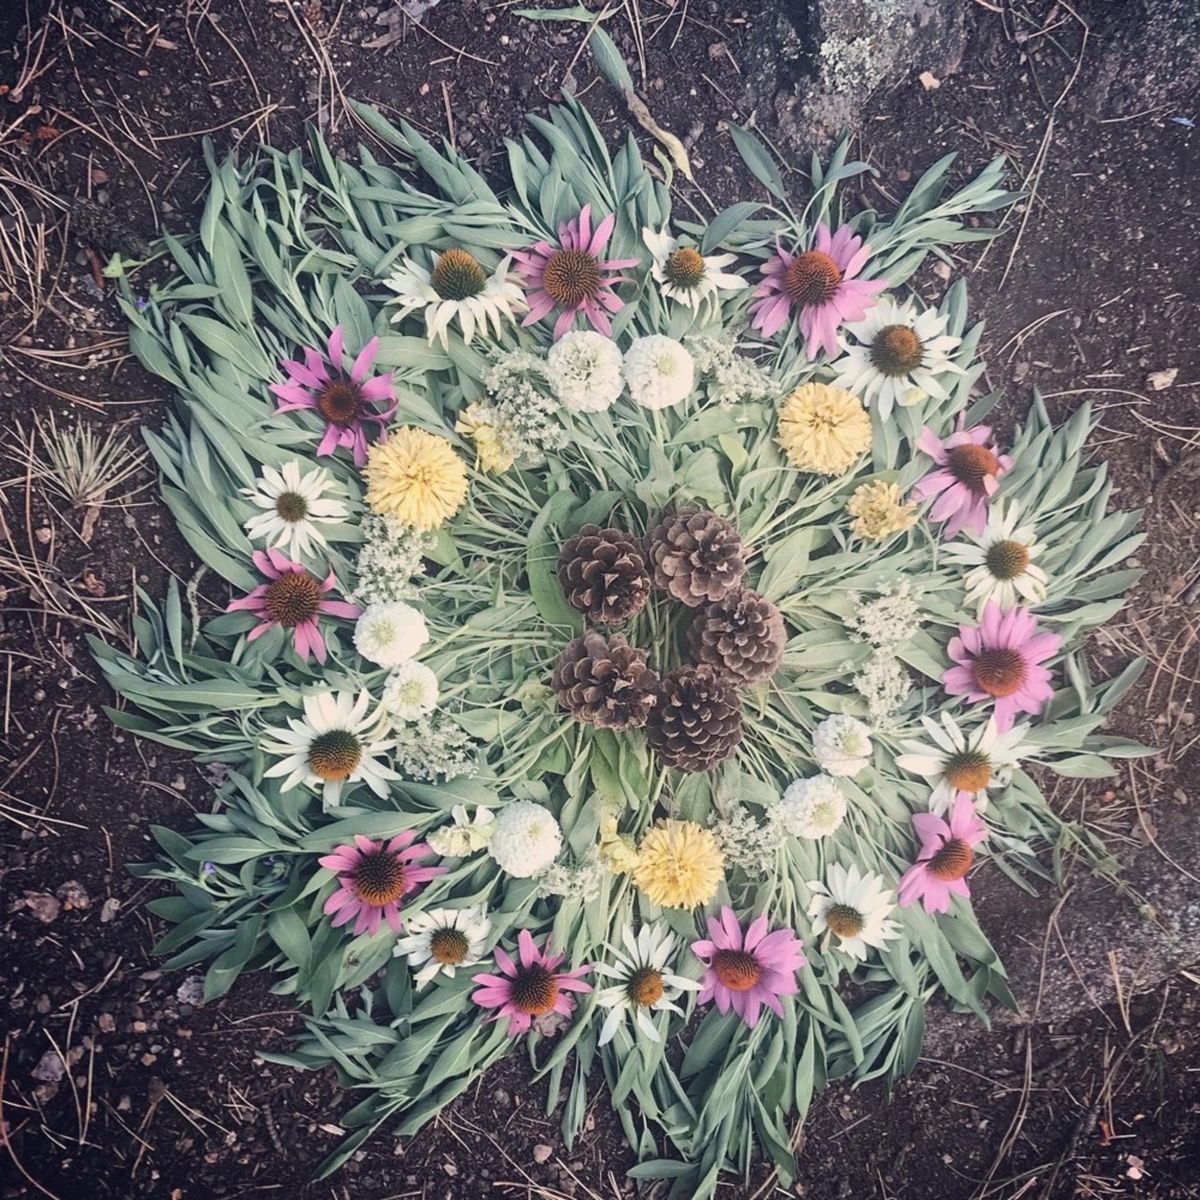 Womens Garden Wellness Series: Summer Herbal Wisdom, Earth Dance & Nature Based Ritual Arts